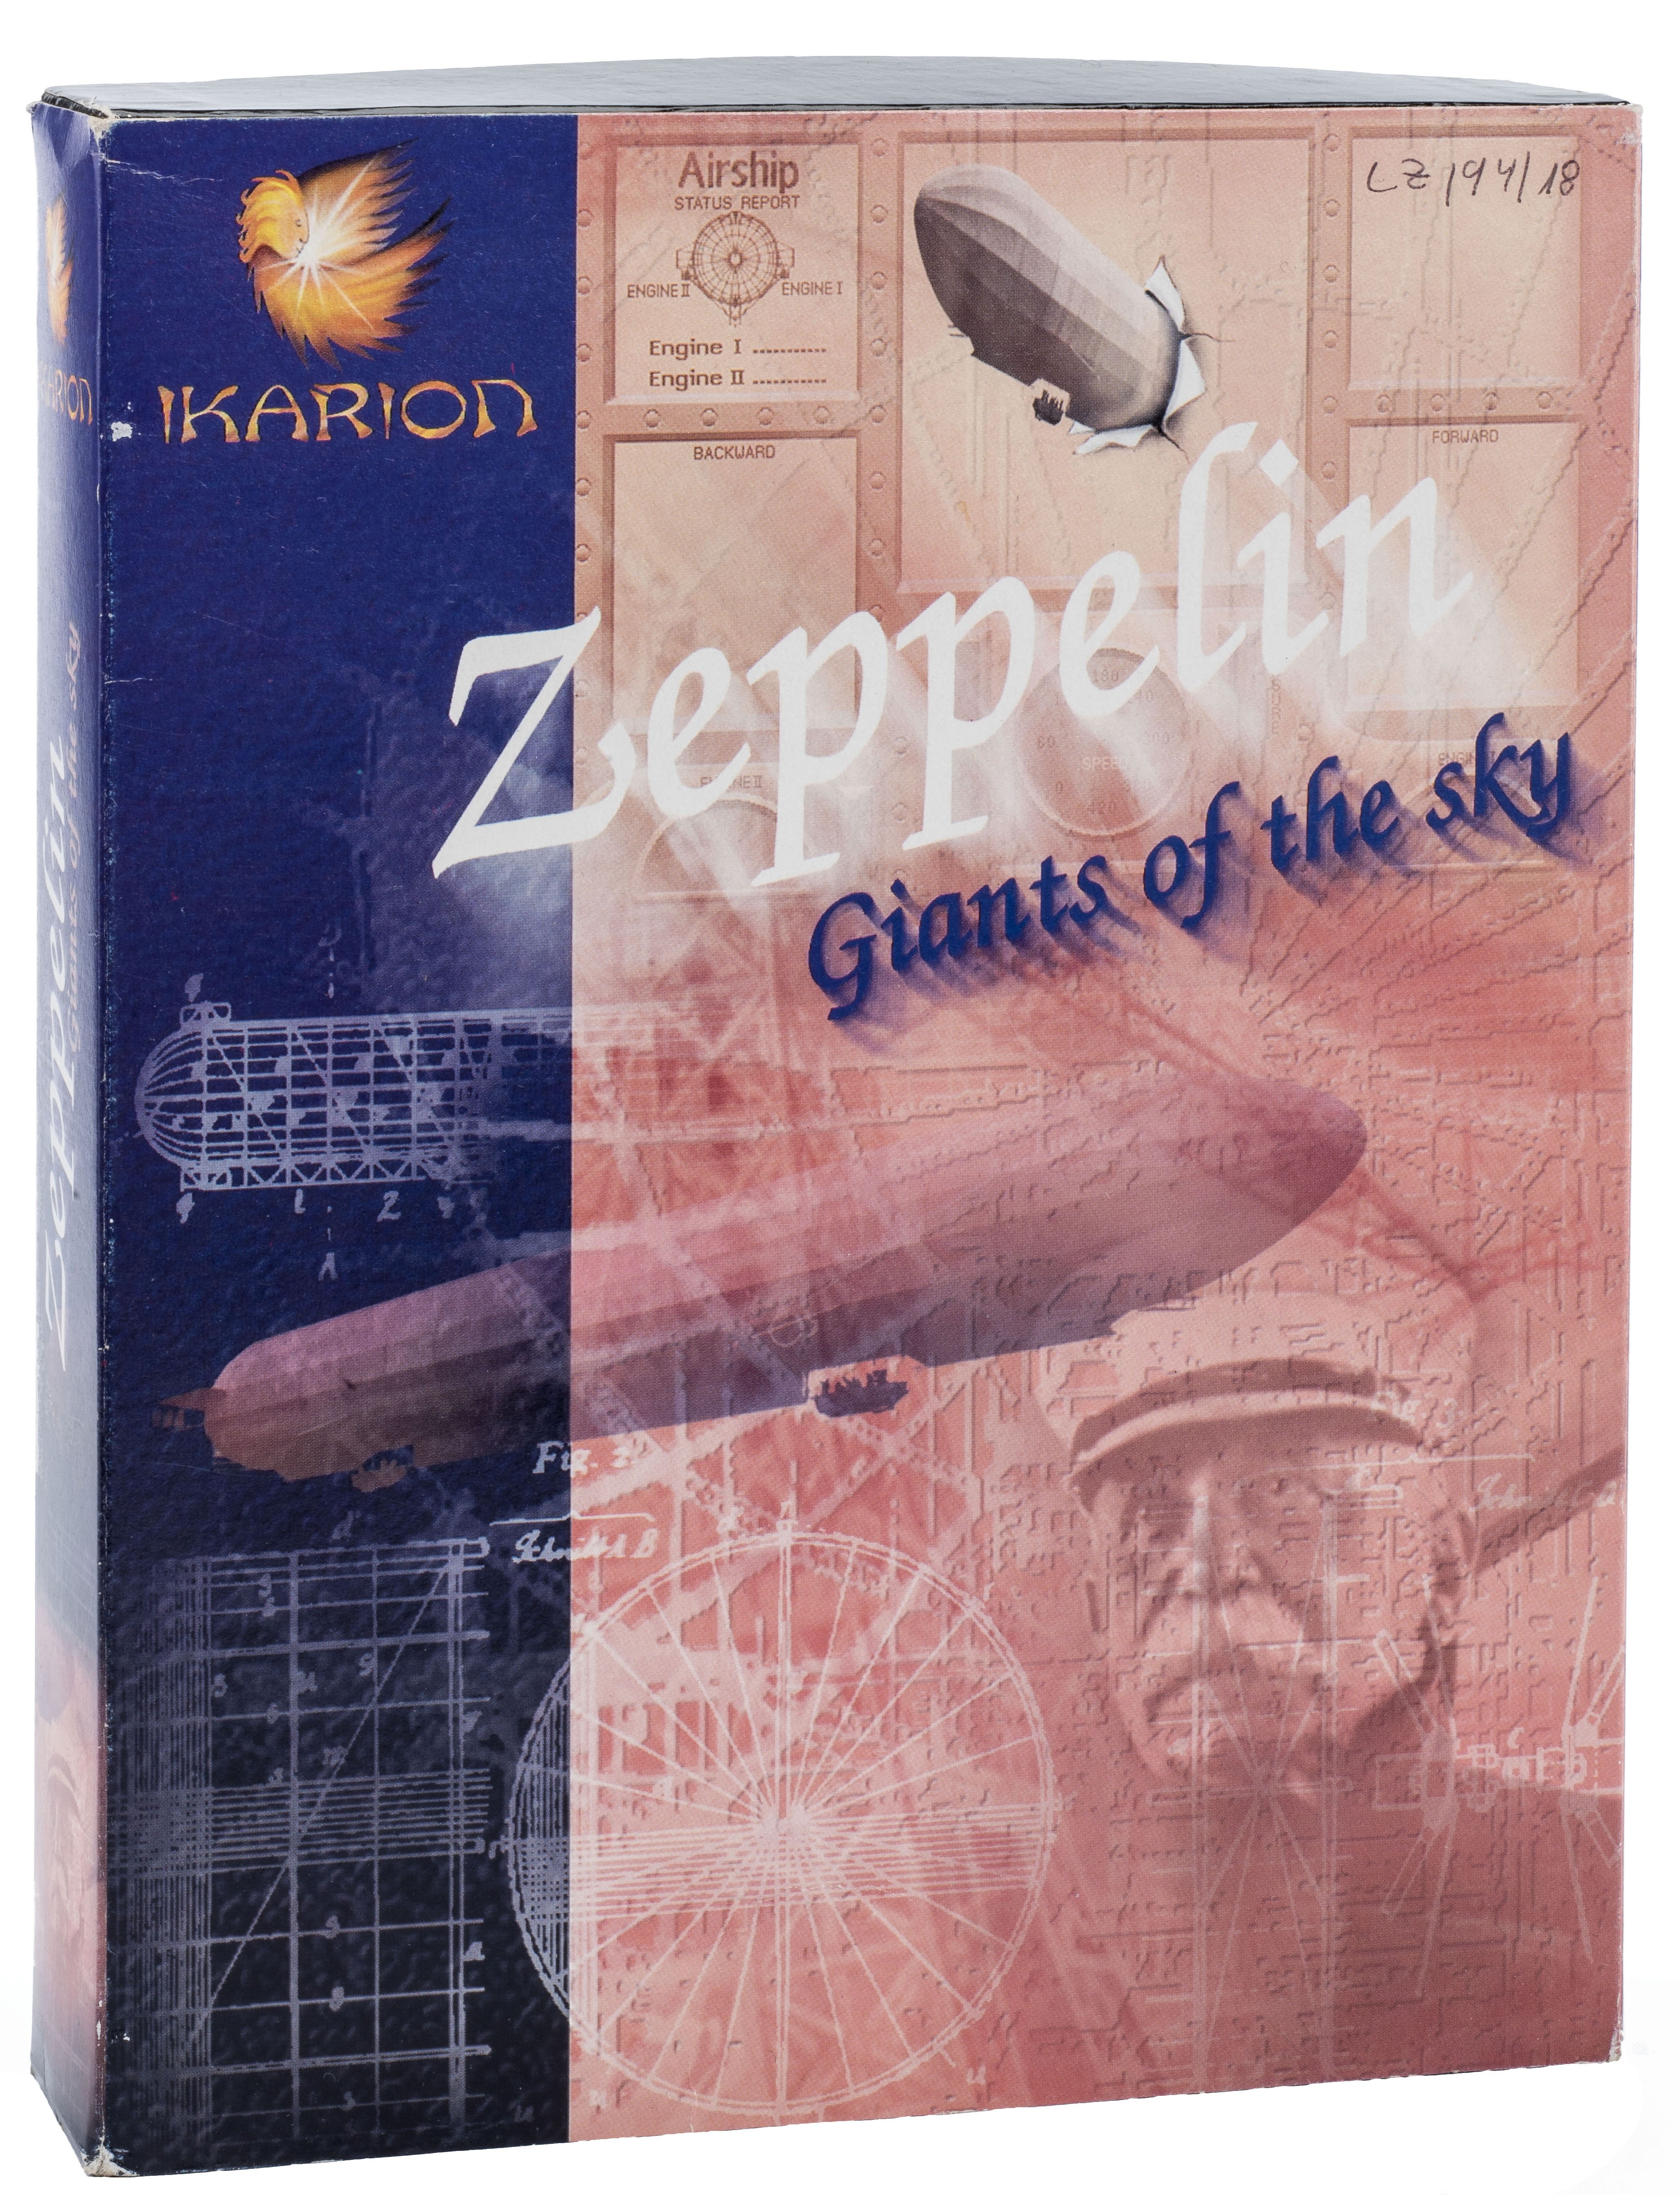 Computerspiel: Giants of the Sky (Zeppelin Museum Friedrichshafen GmbH CC BY-NC-SA)